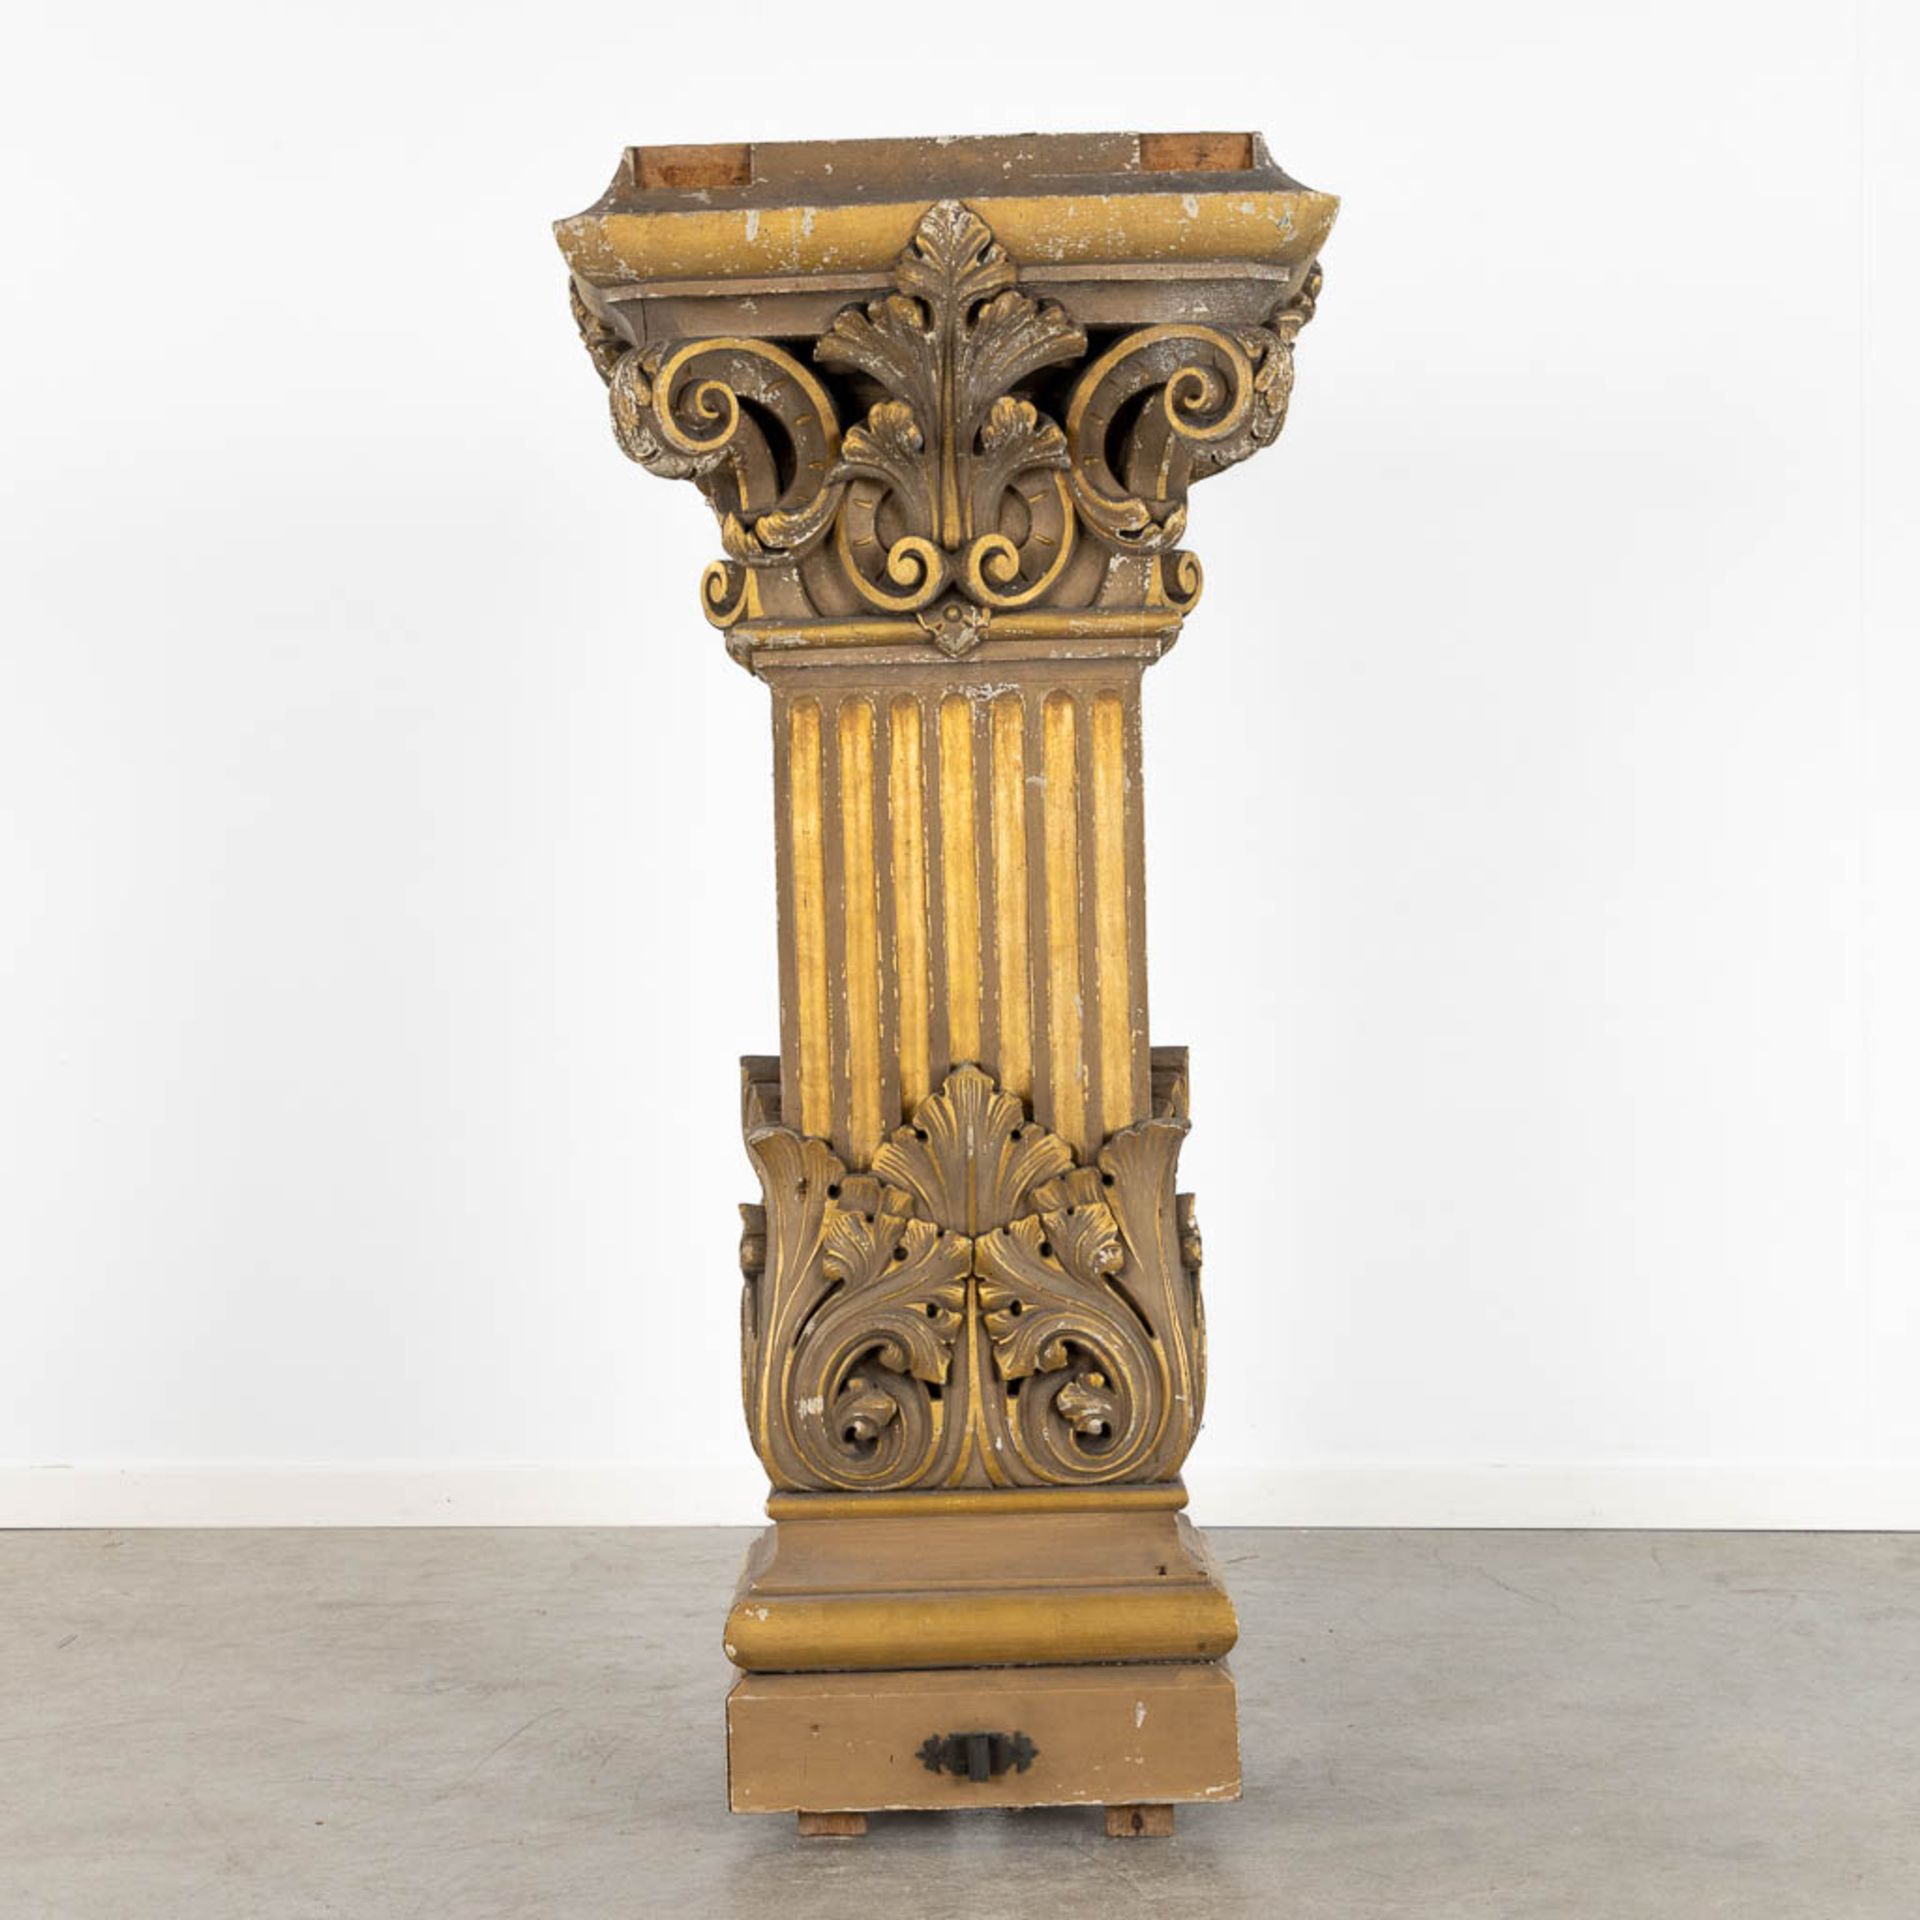 A richly gilt and woodsculptured pedestal with an ionic capitel. Circa 1900. (L:44 x W:60 x H:130 cm